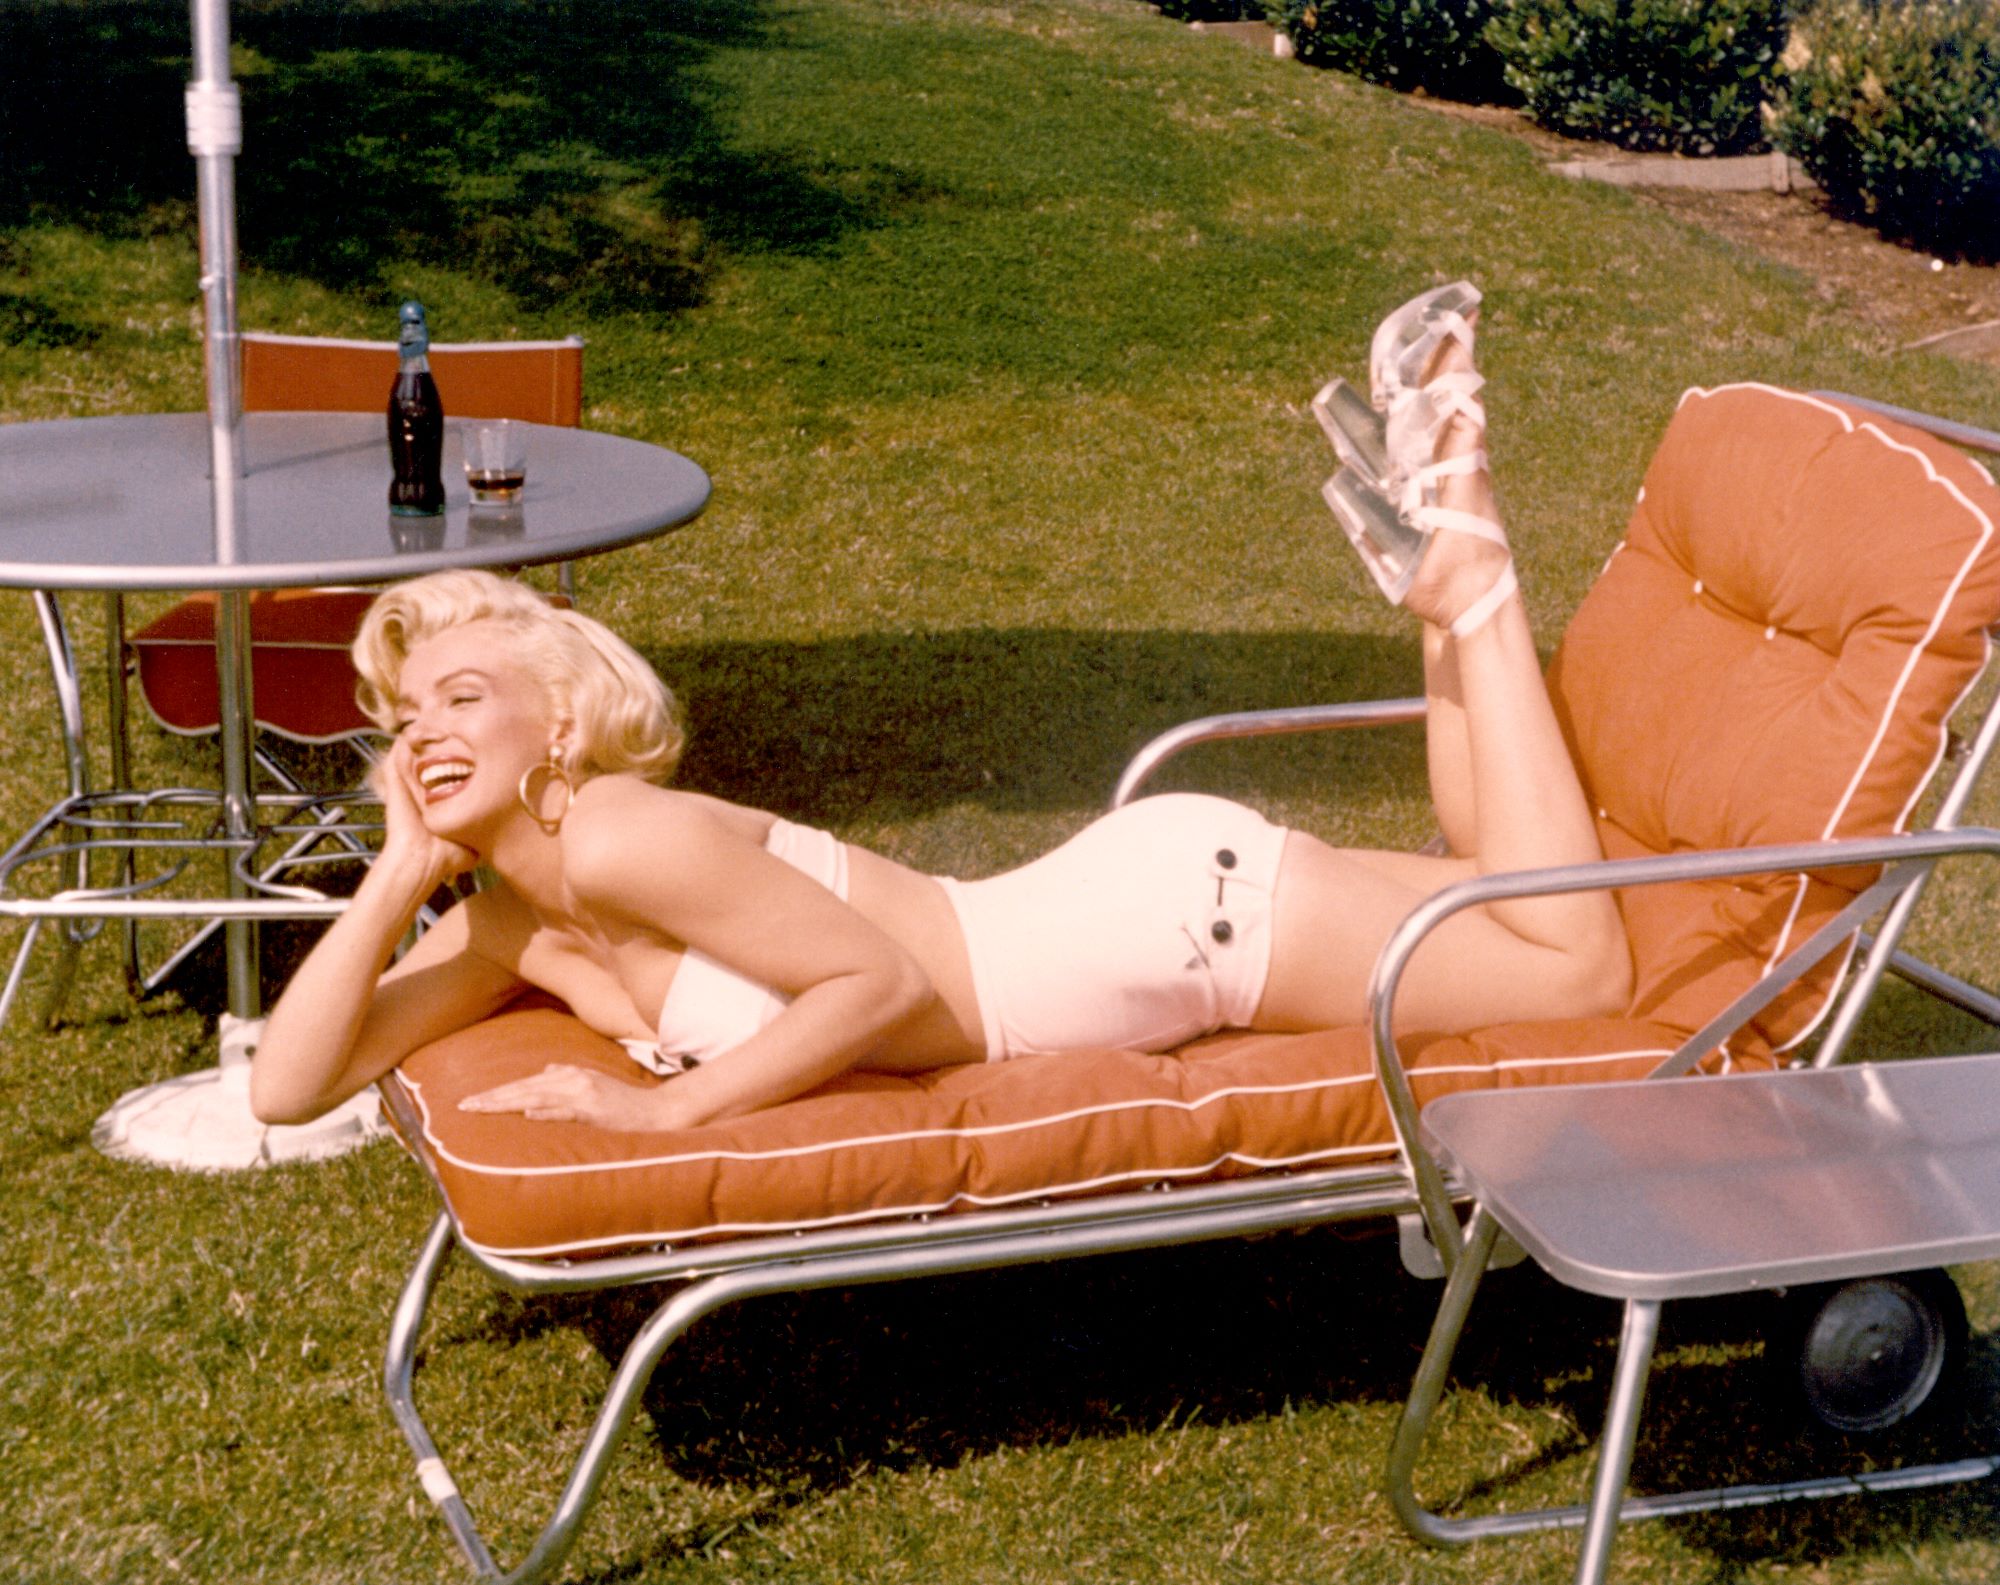 Marilyn Monroe in a swimsuit posing on a lawn chair